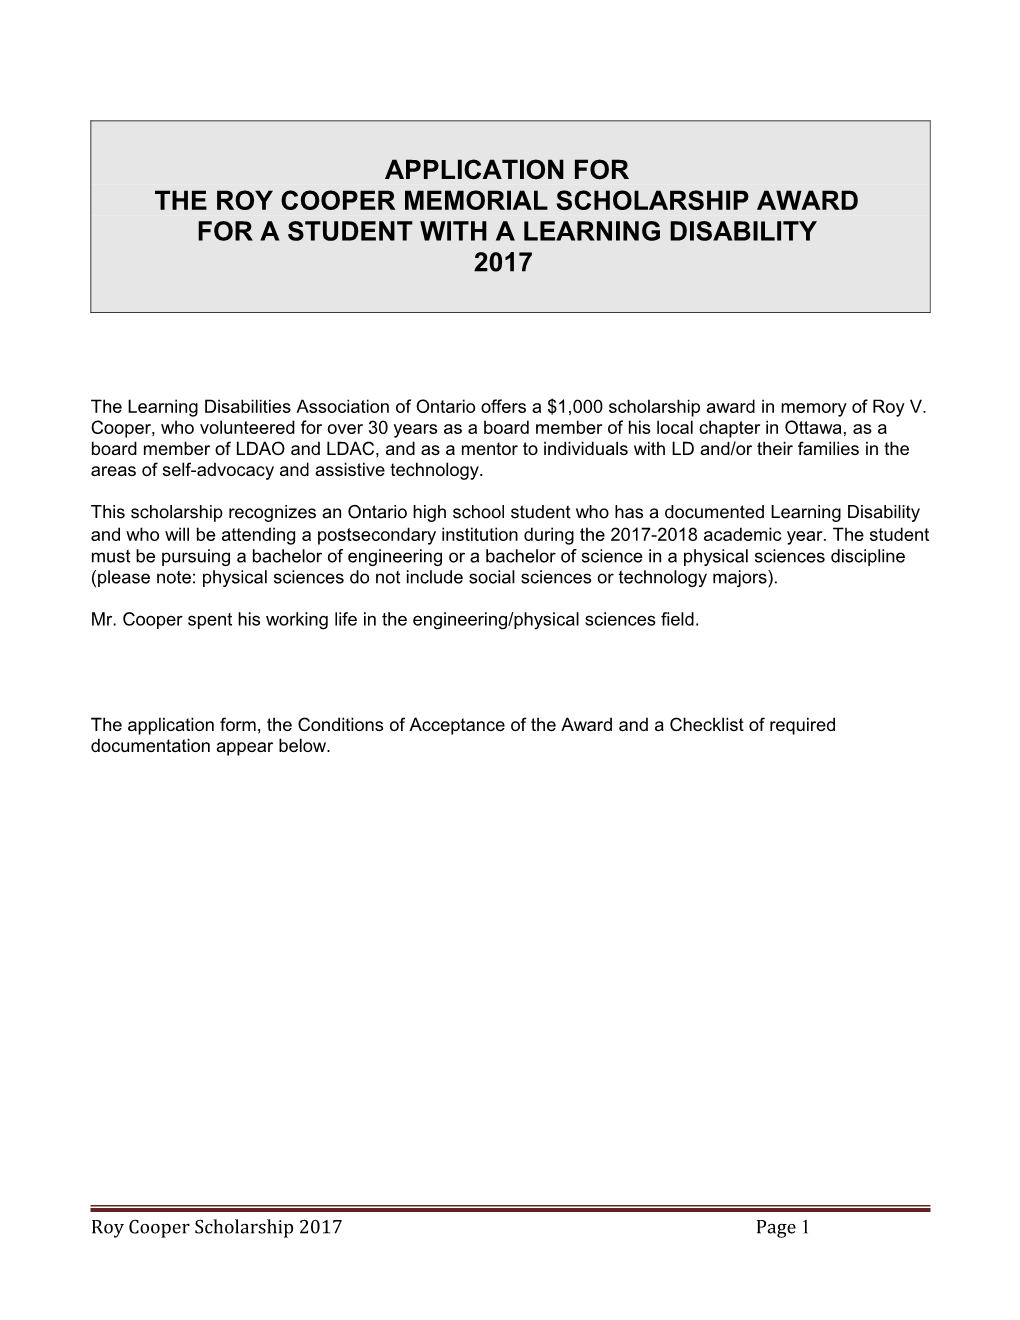 Roy Cooper Scholarship Award